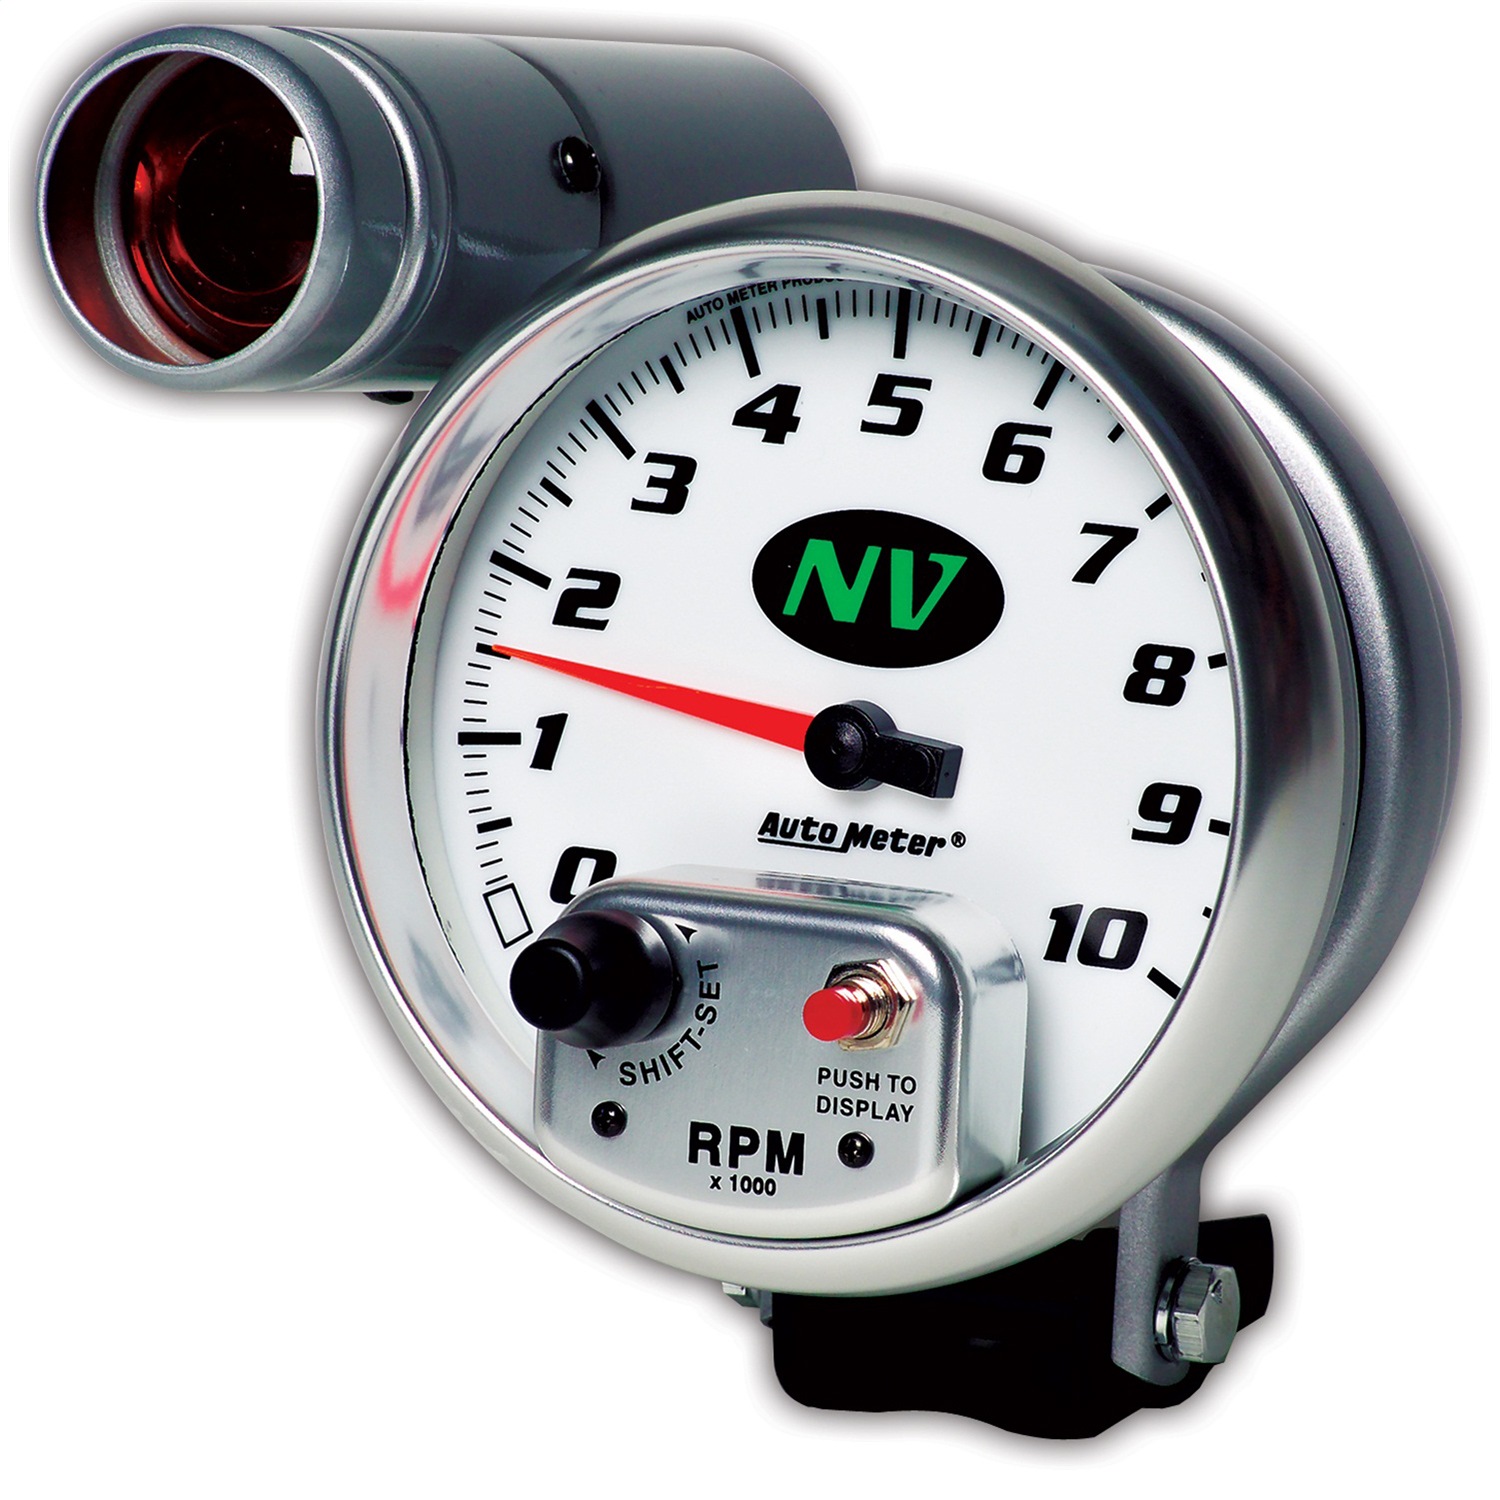 AutoMeter 7499 NV Shift-Lite Tachometer